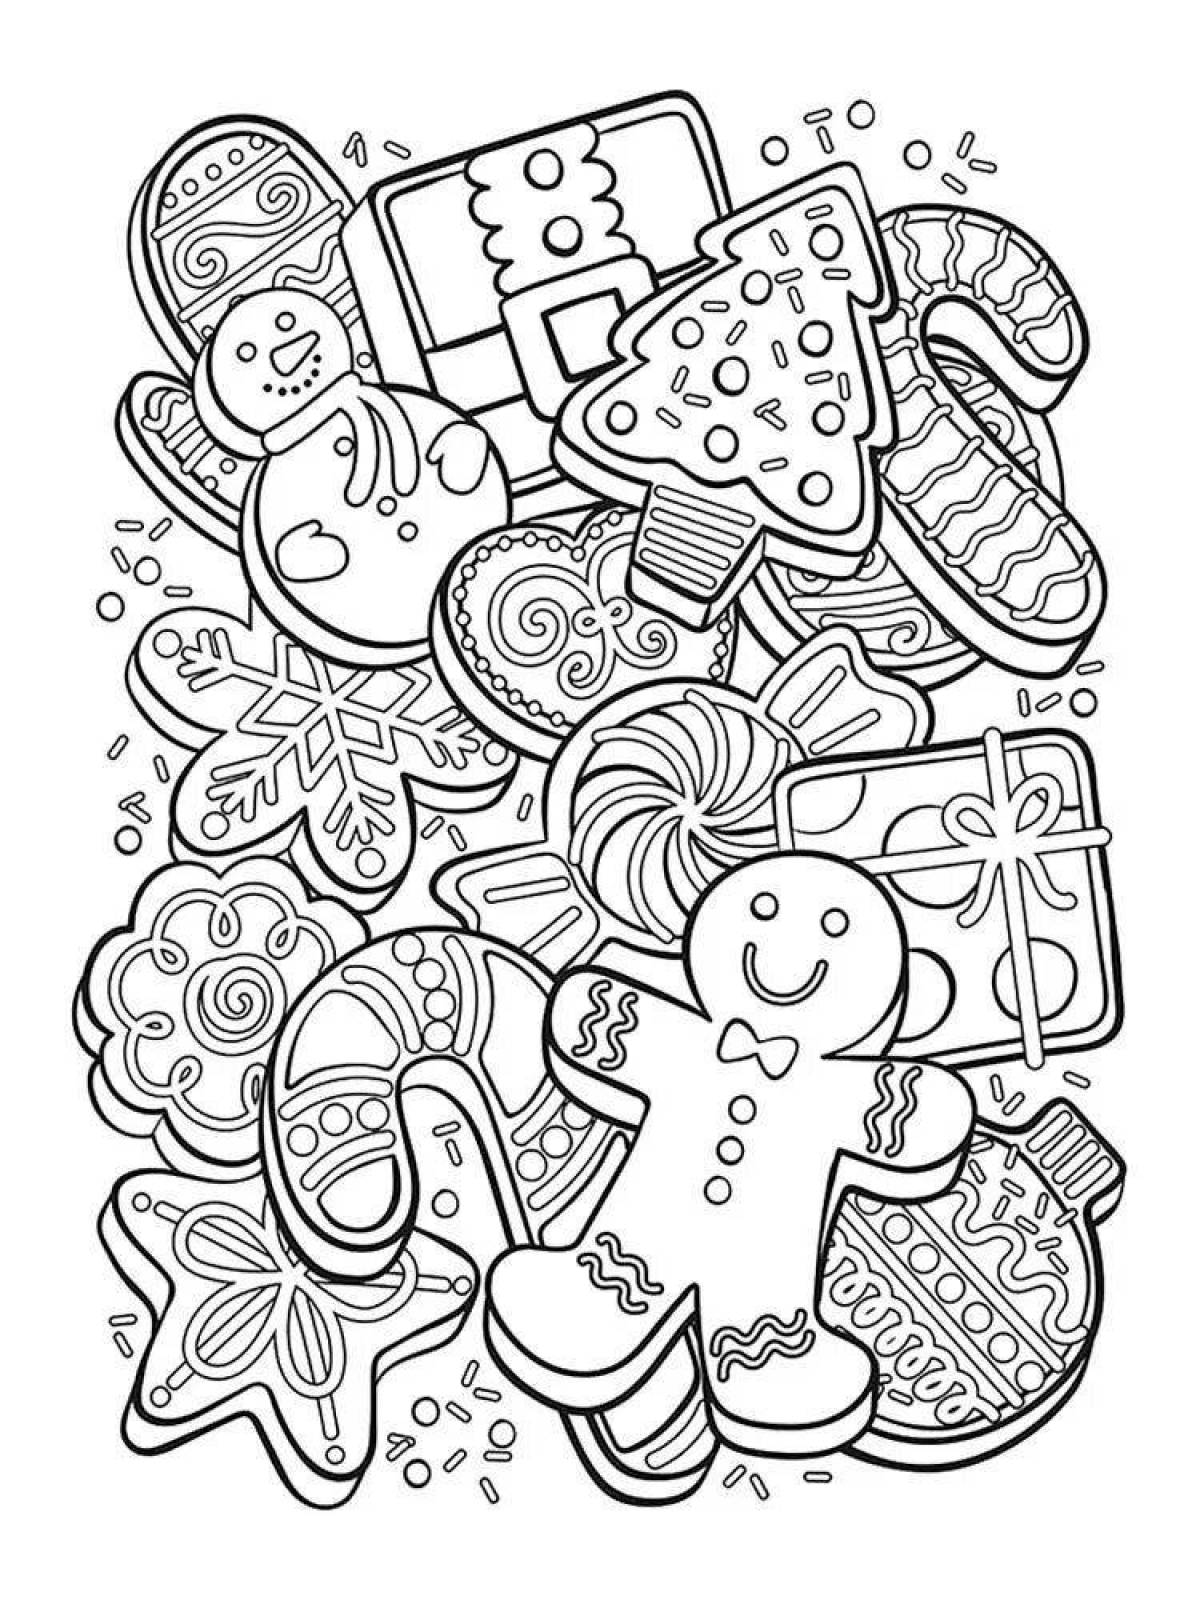 Adorable gingerbread coloring book